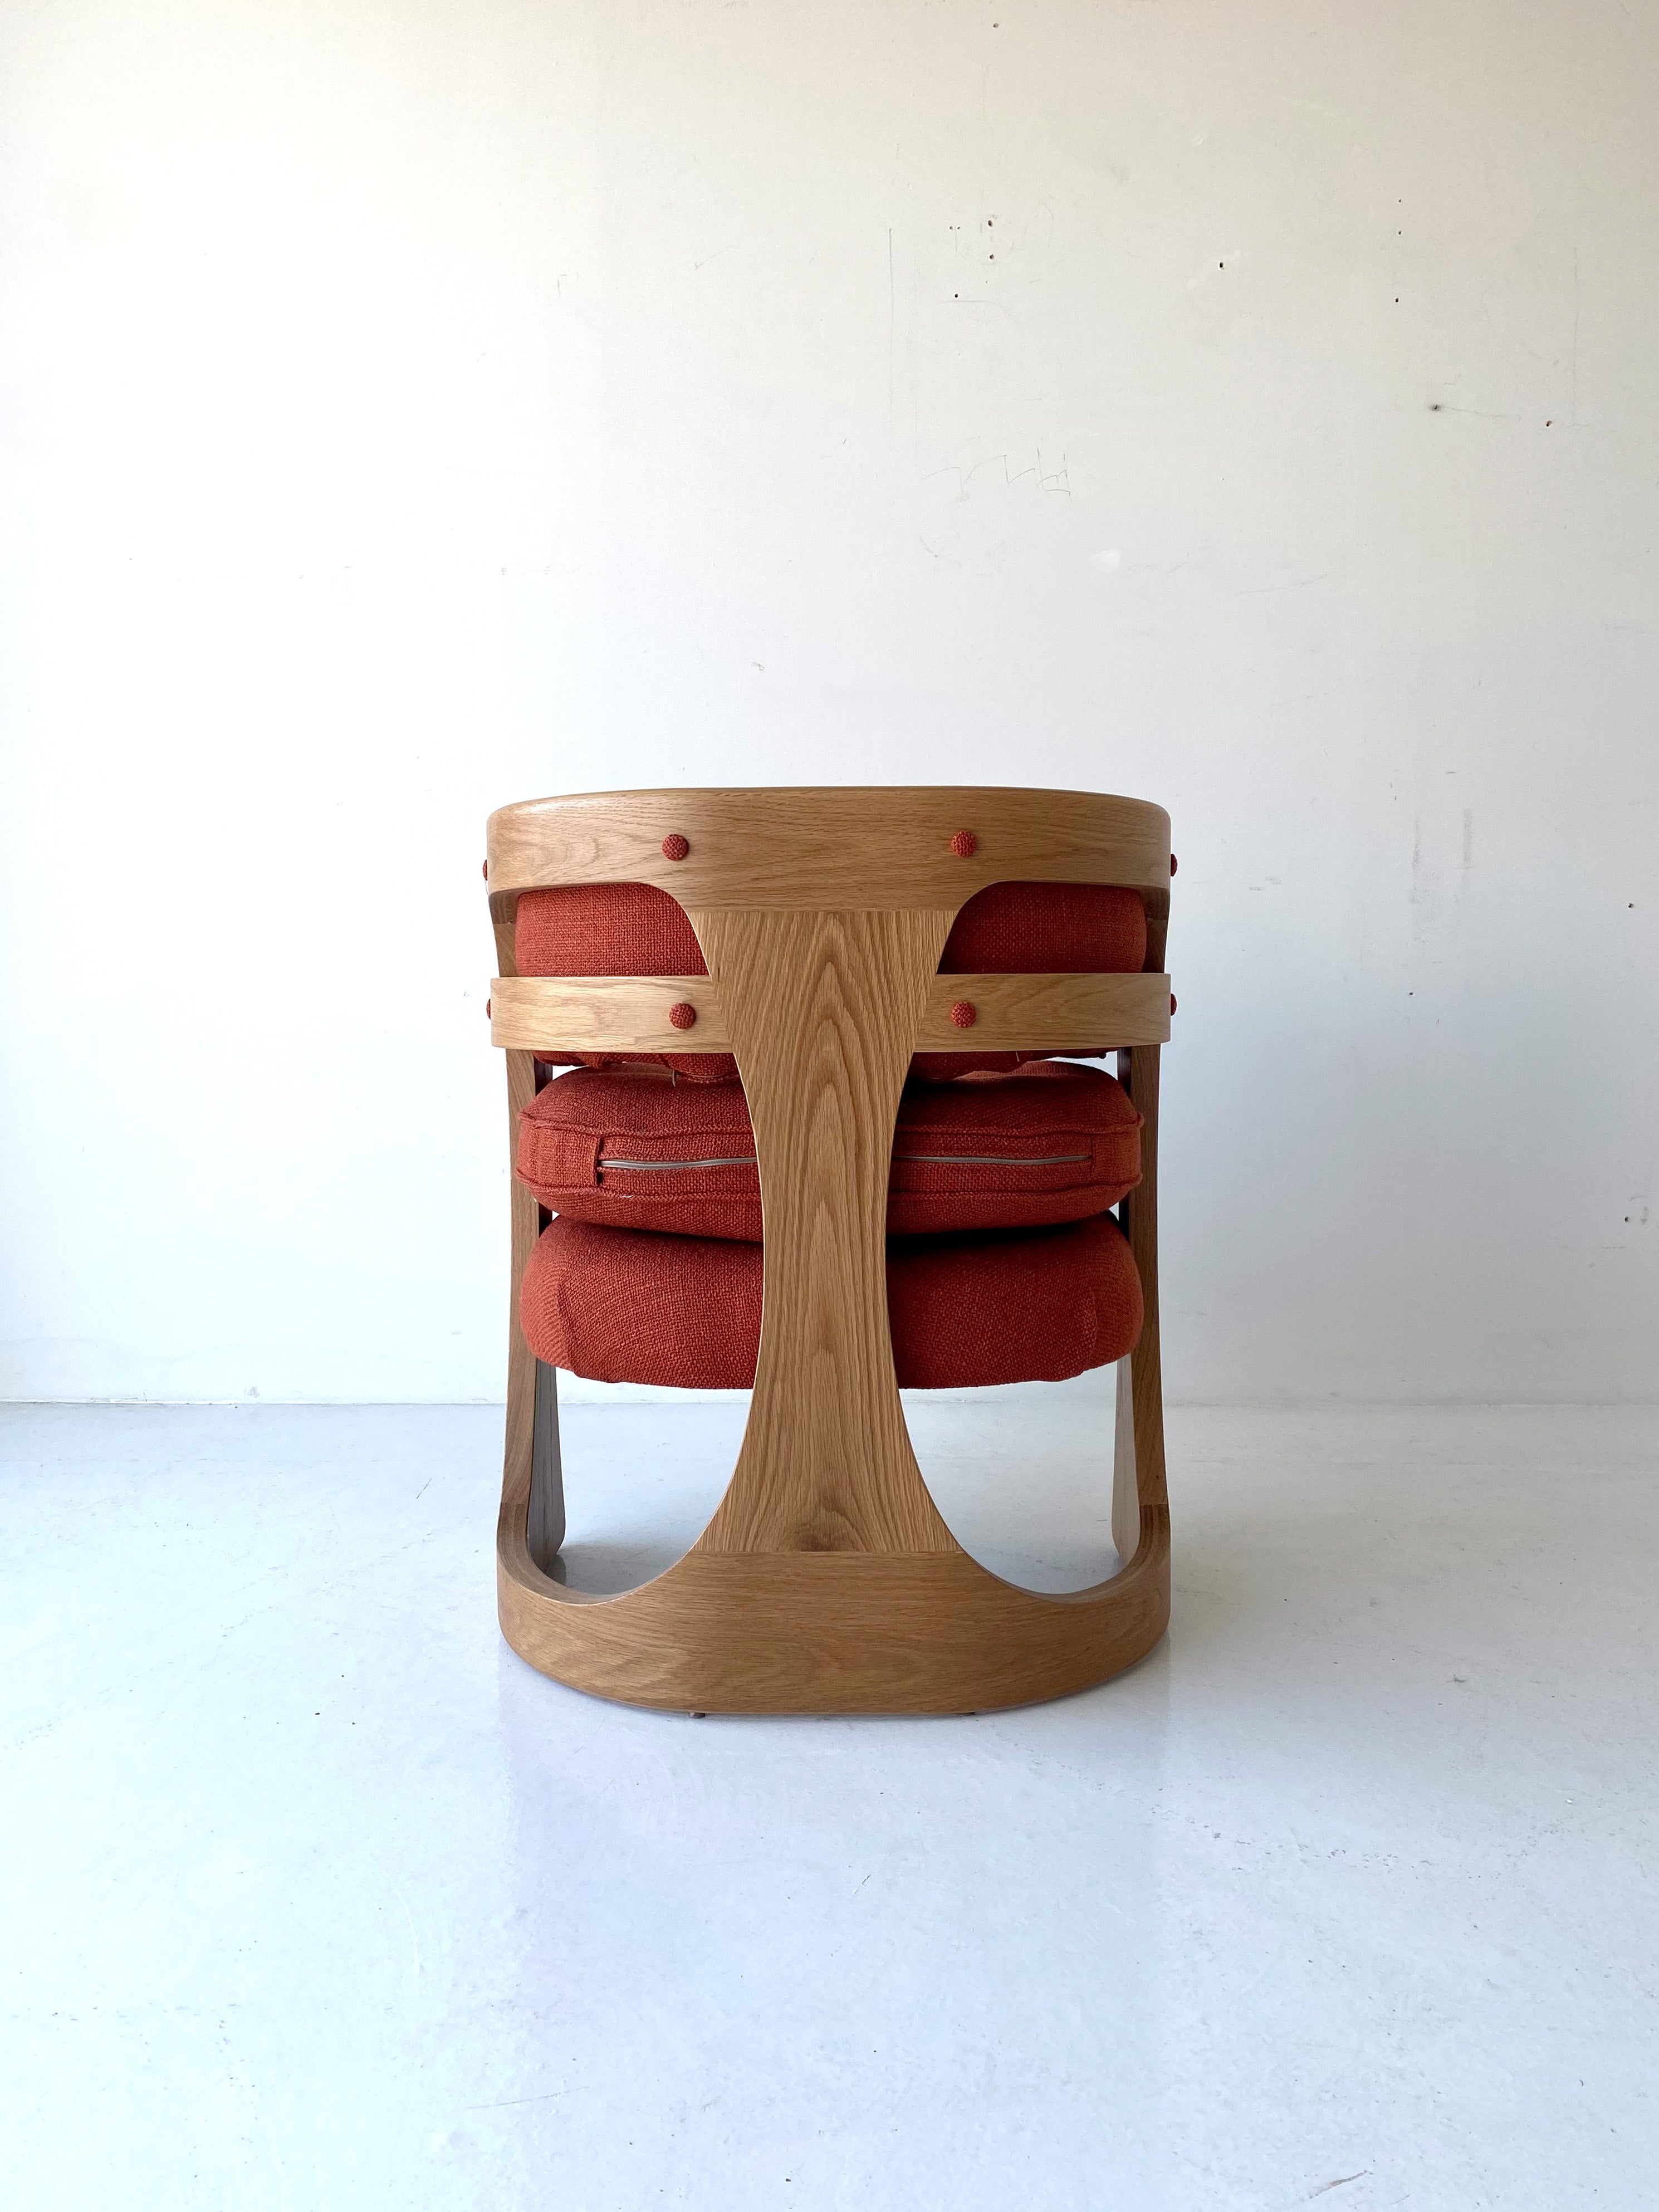 Modern Dining Chair Barricas Series